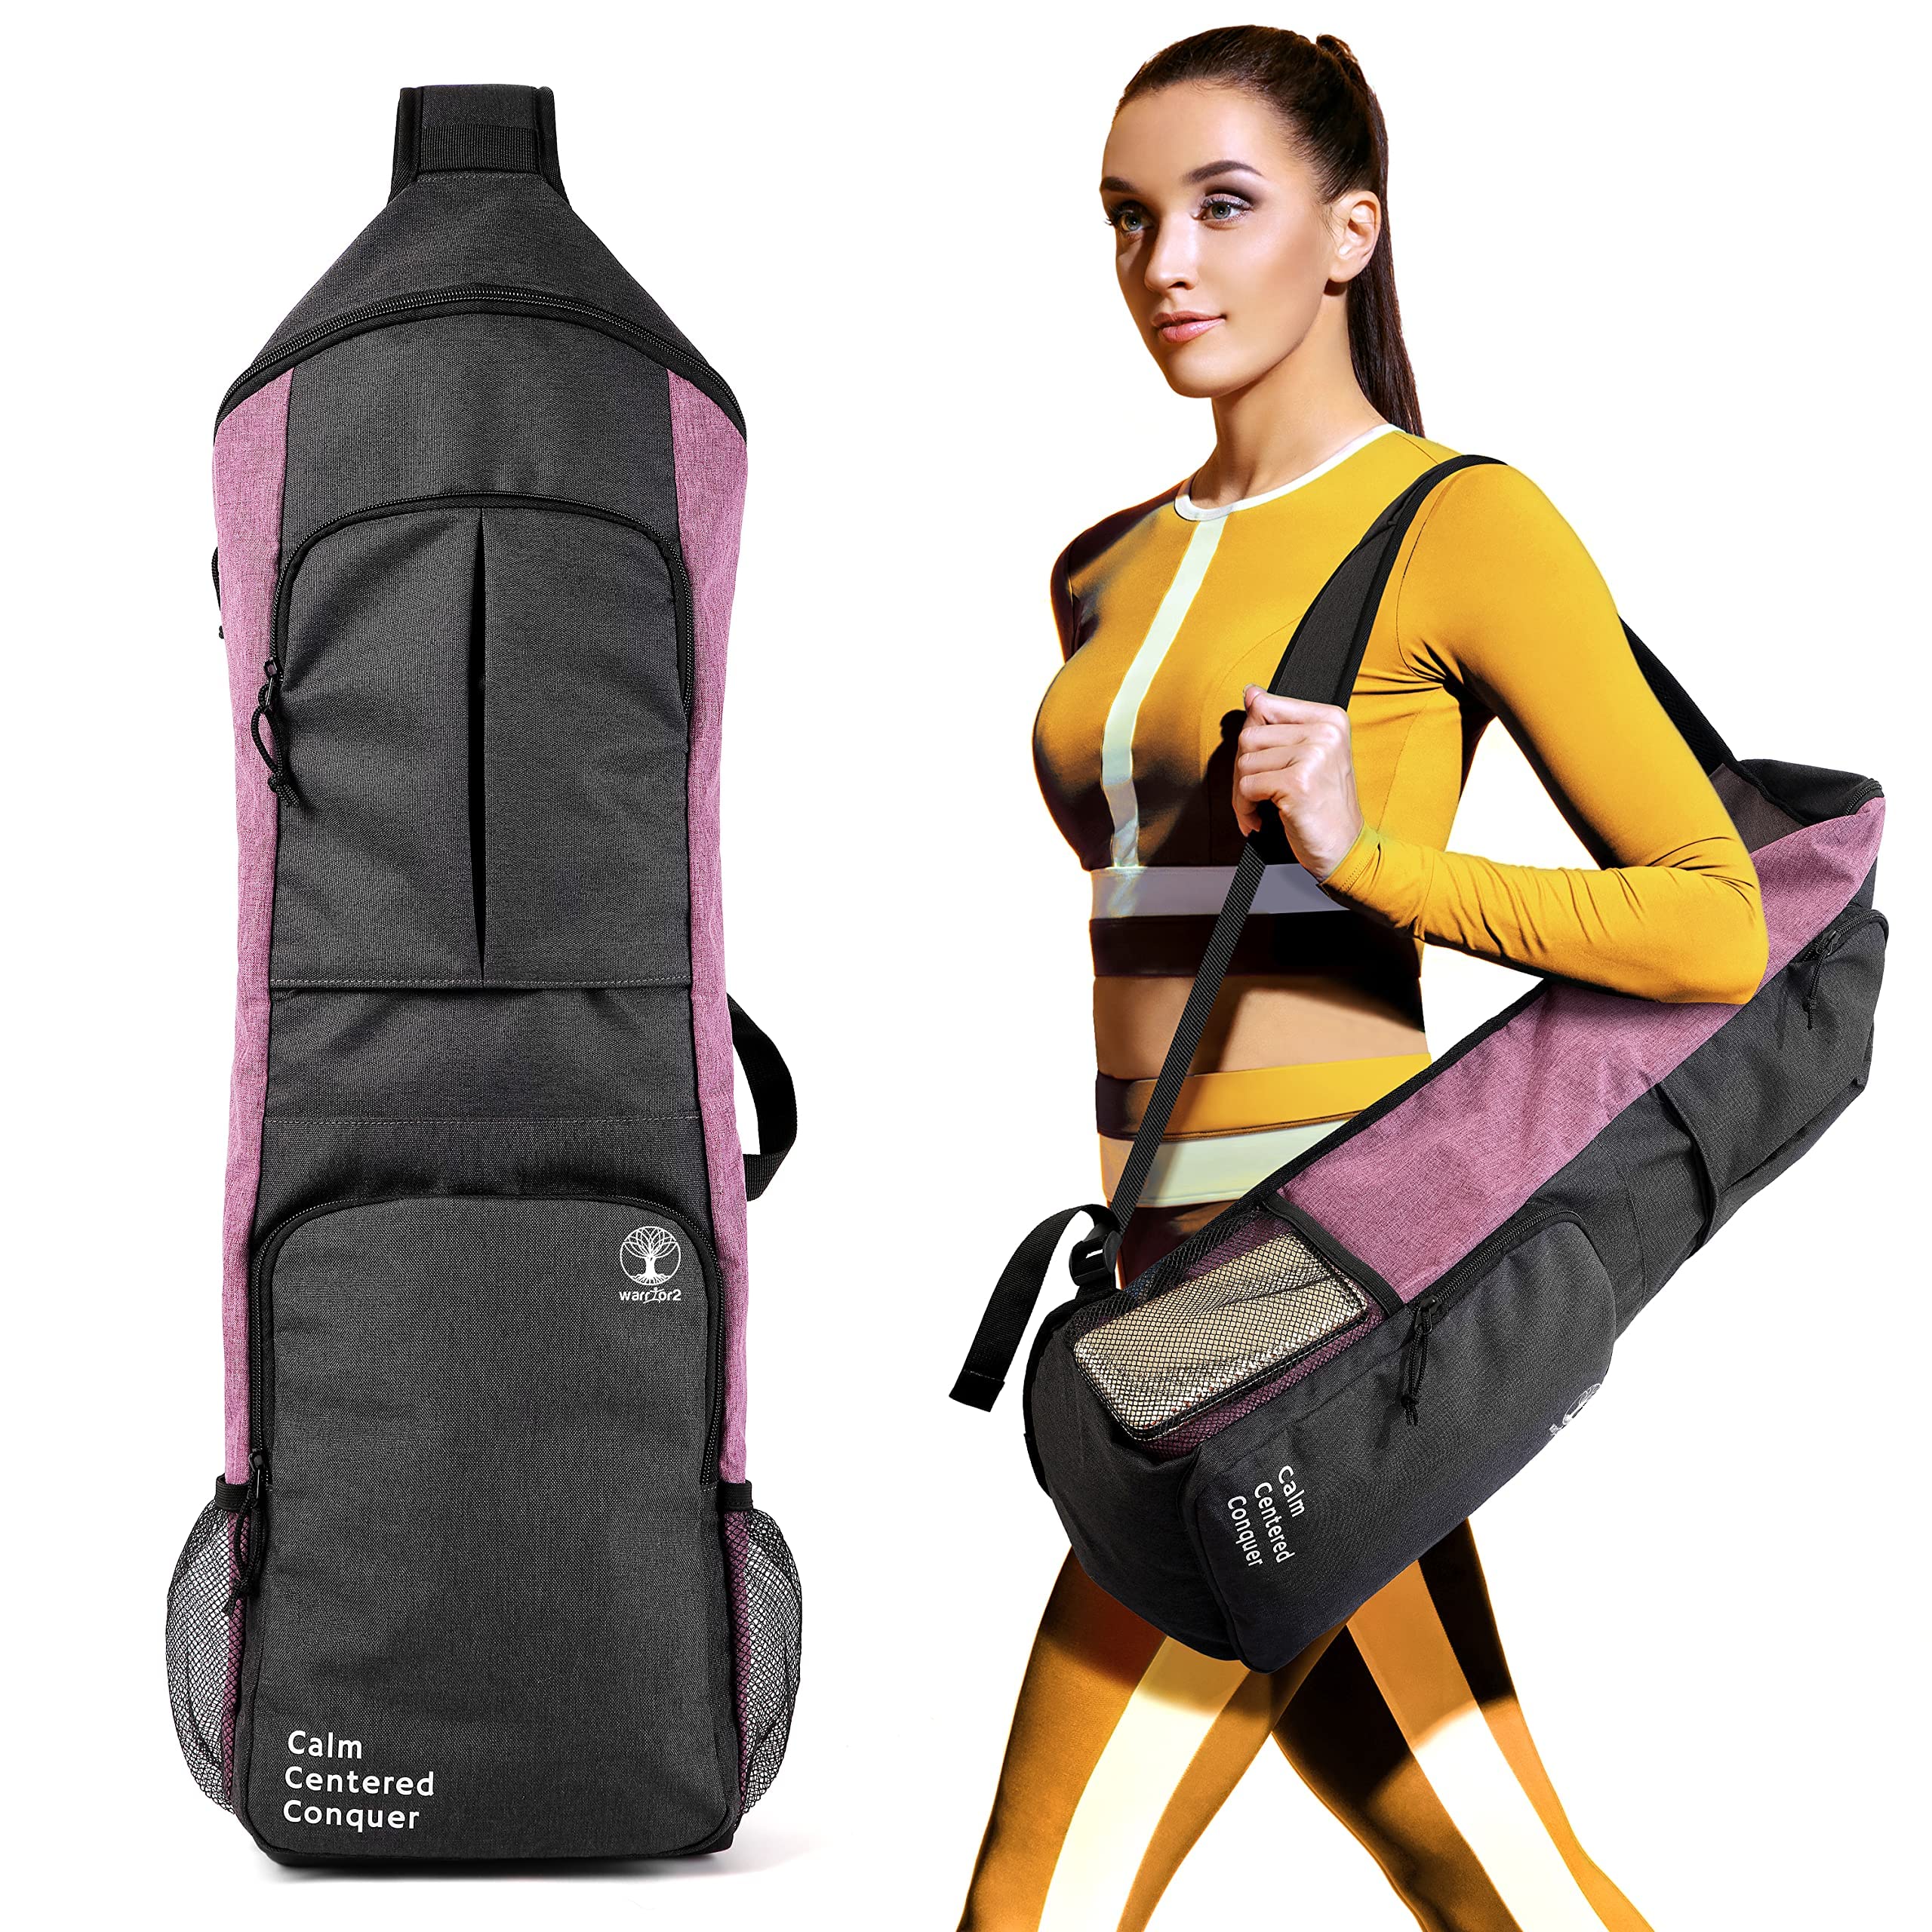 WARRIOR2 Yoga Mat Holder Carrier, Yoga Backpack Fits 1/2 Inch Thick Mat, Large Pockets & Holders | Full Yoga Carrying Bag for Women Men Gym Sport Travel Bike YogaAccessories Purple